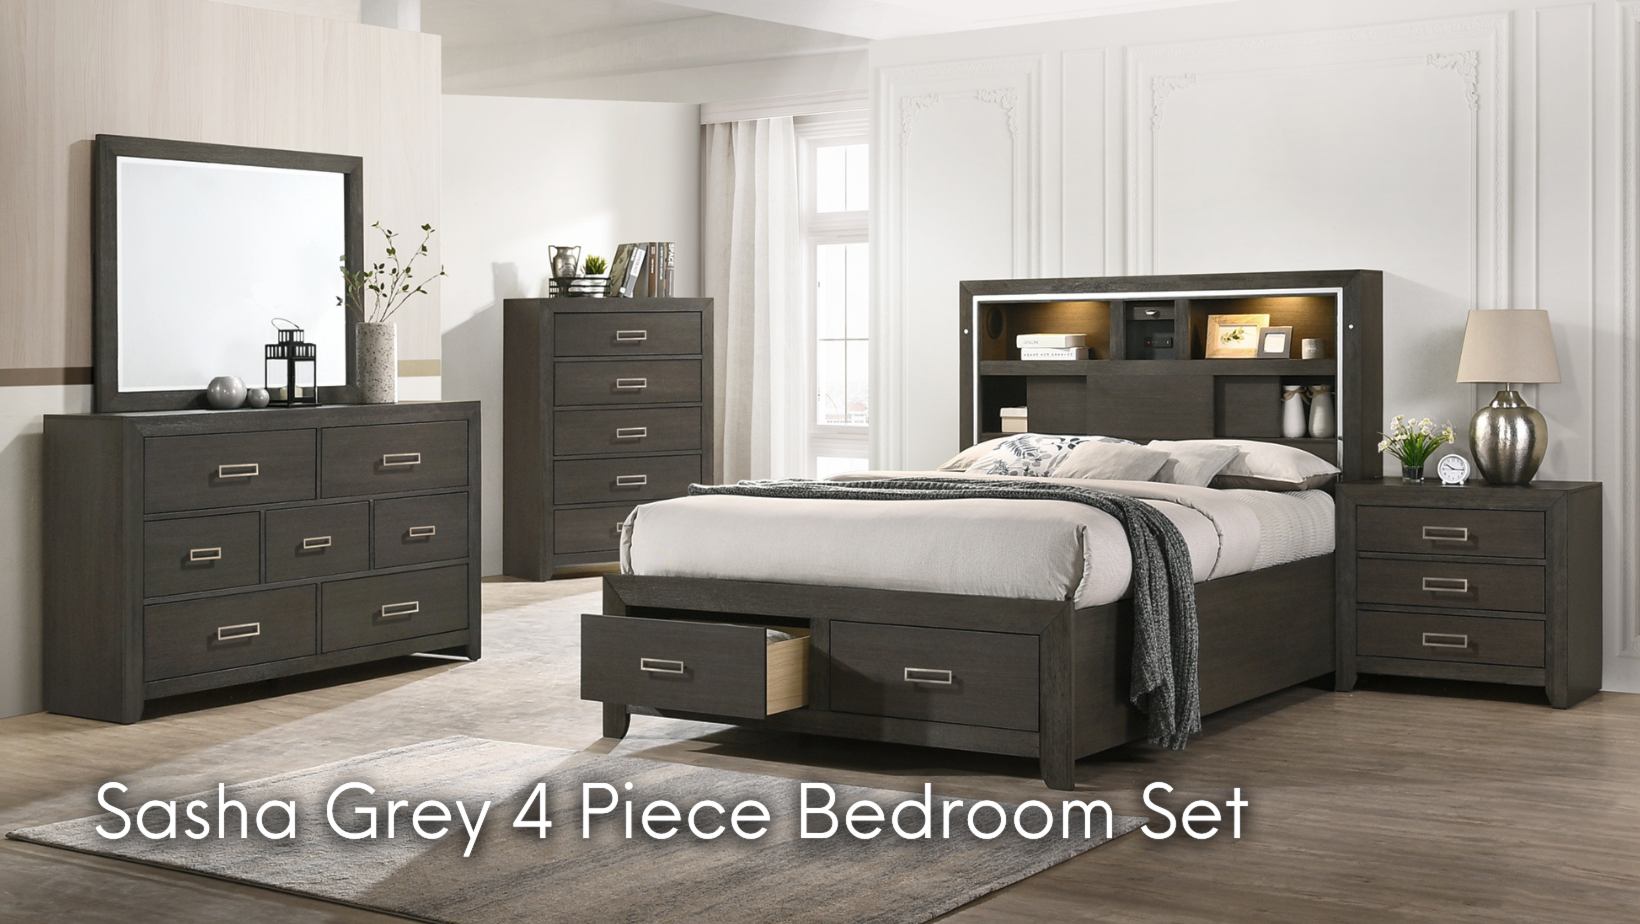 Sasha Grey 4 Piece Bedroom Set